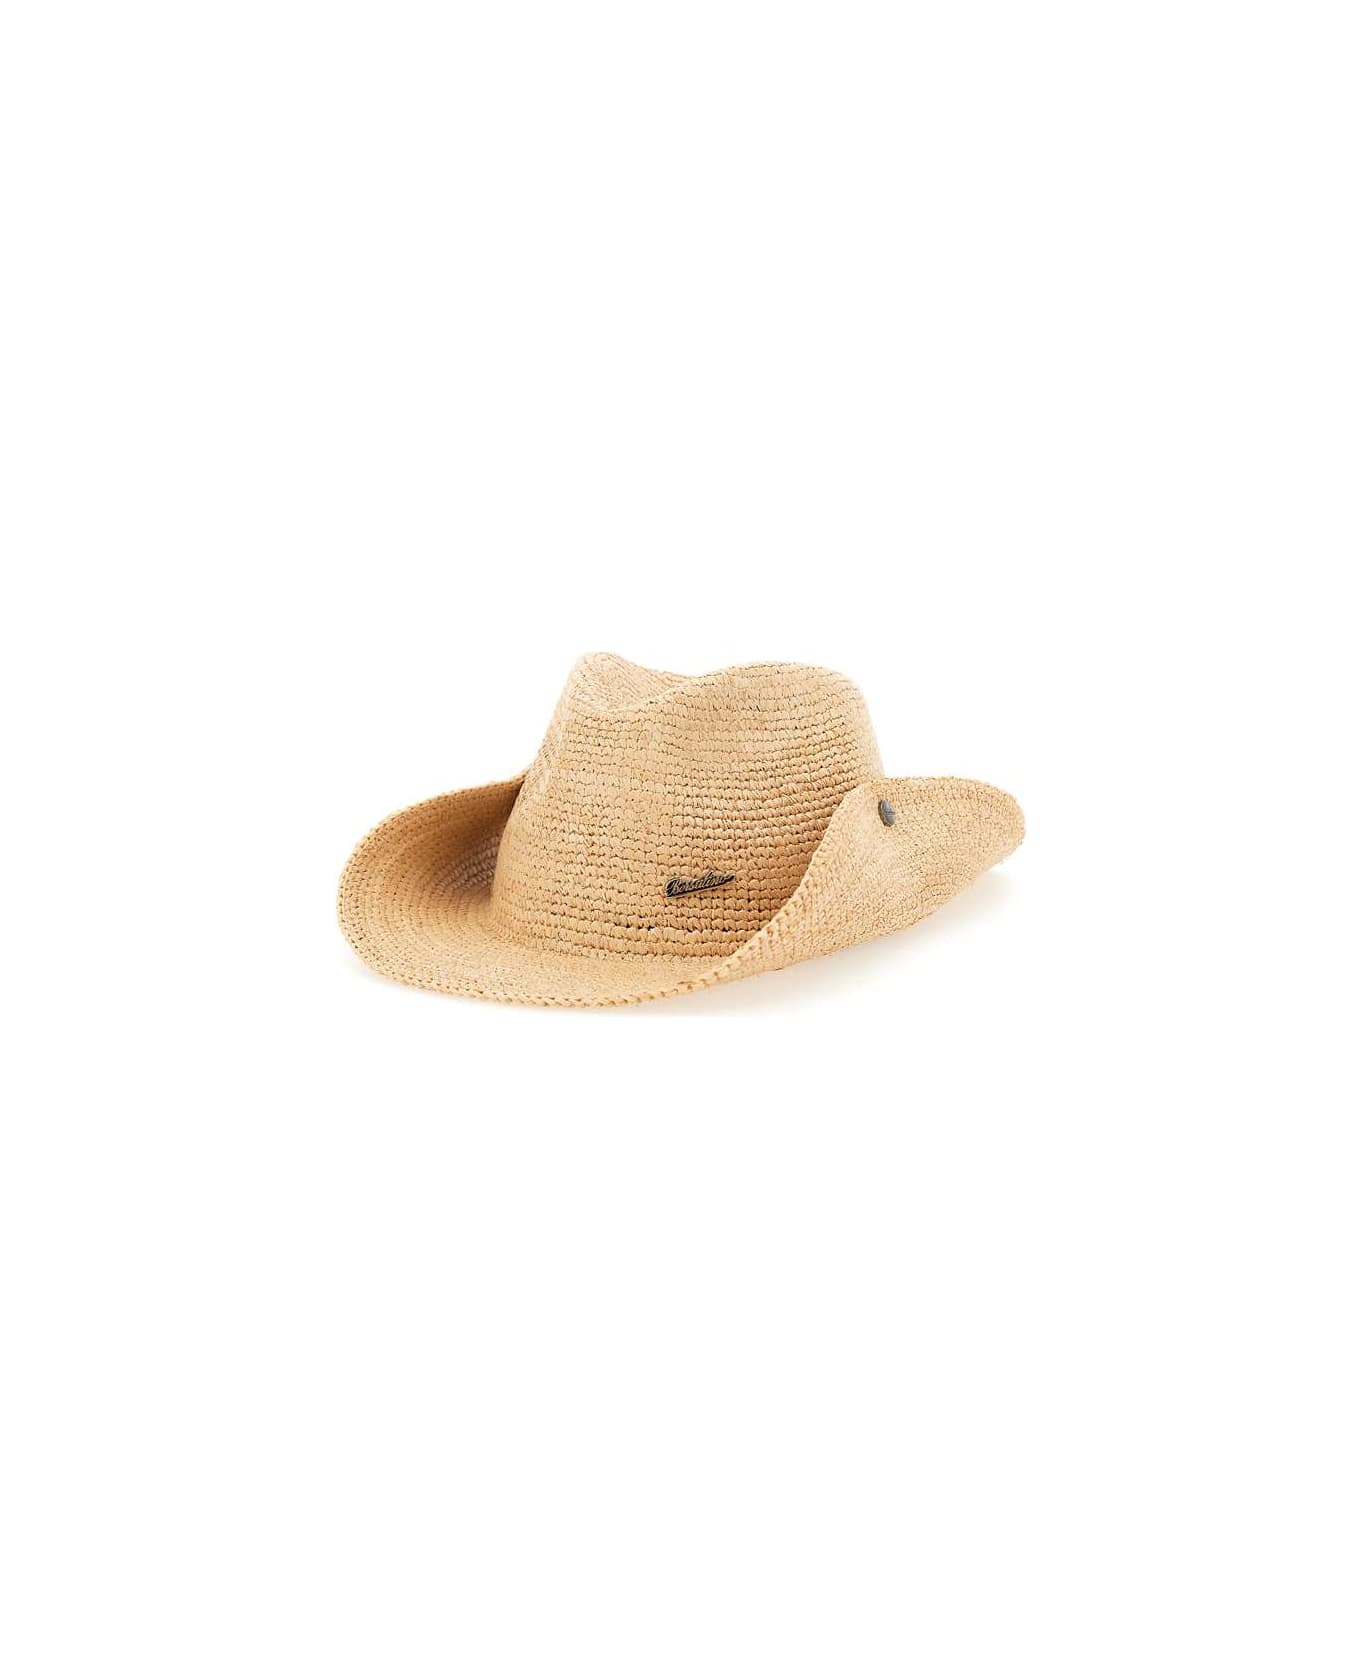 Borsalino Raffia Hat - BEIGE 帽子